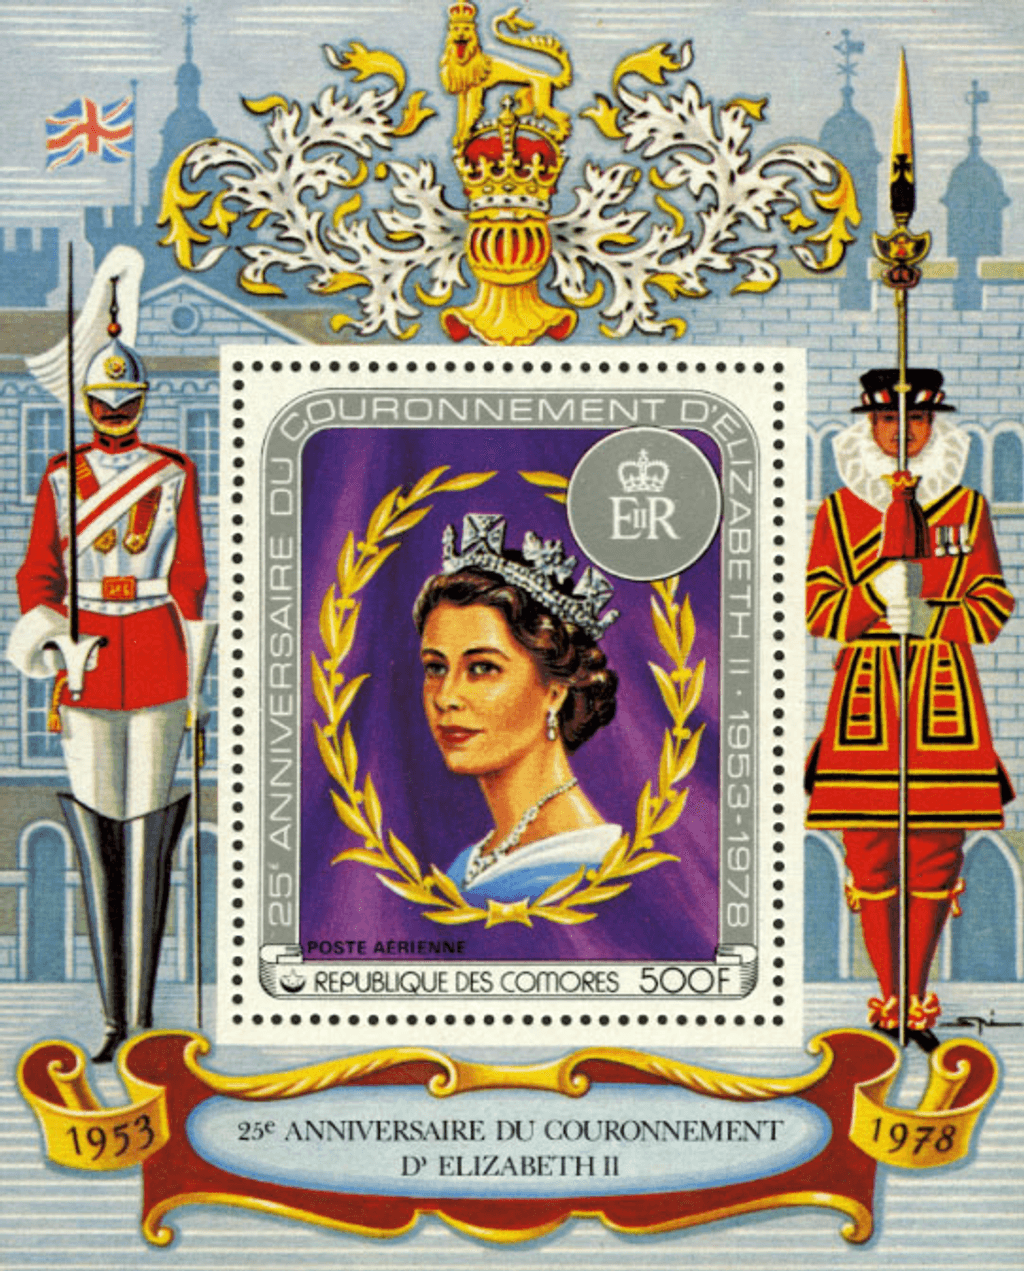 Jubilee of queen Elizabeth II